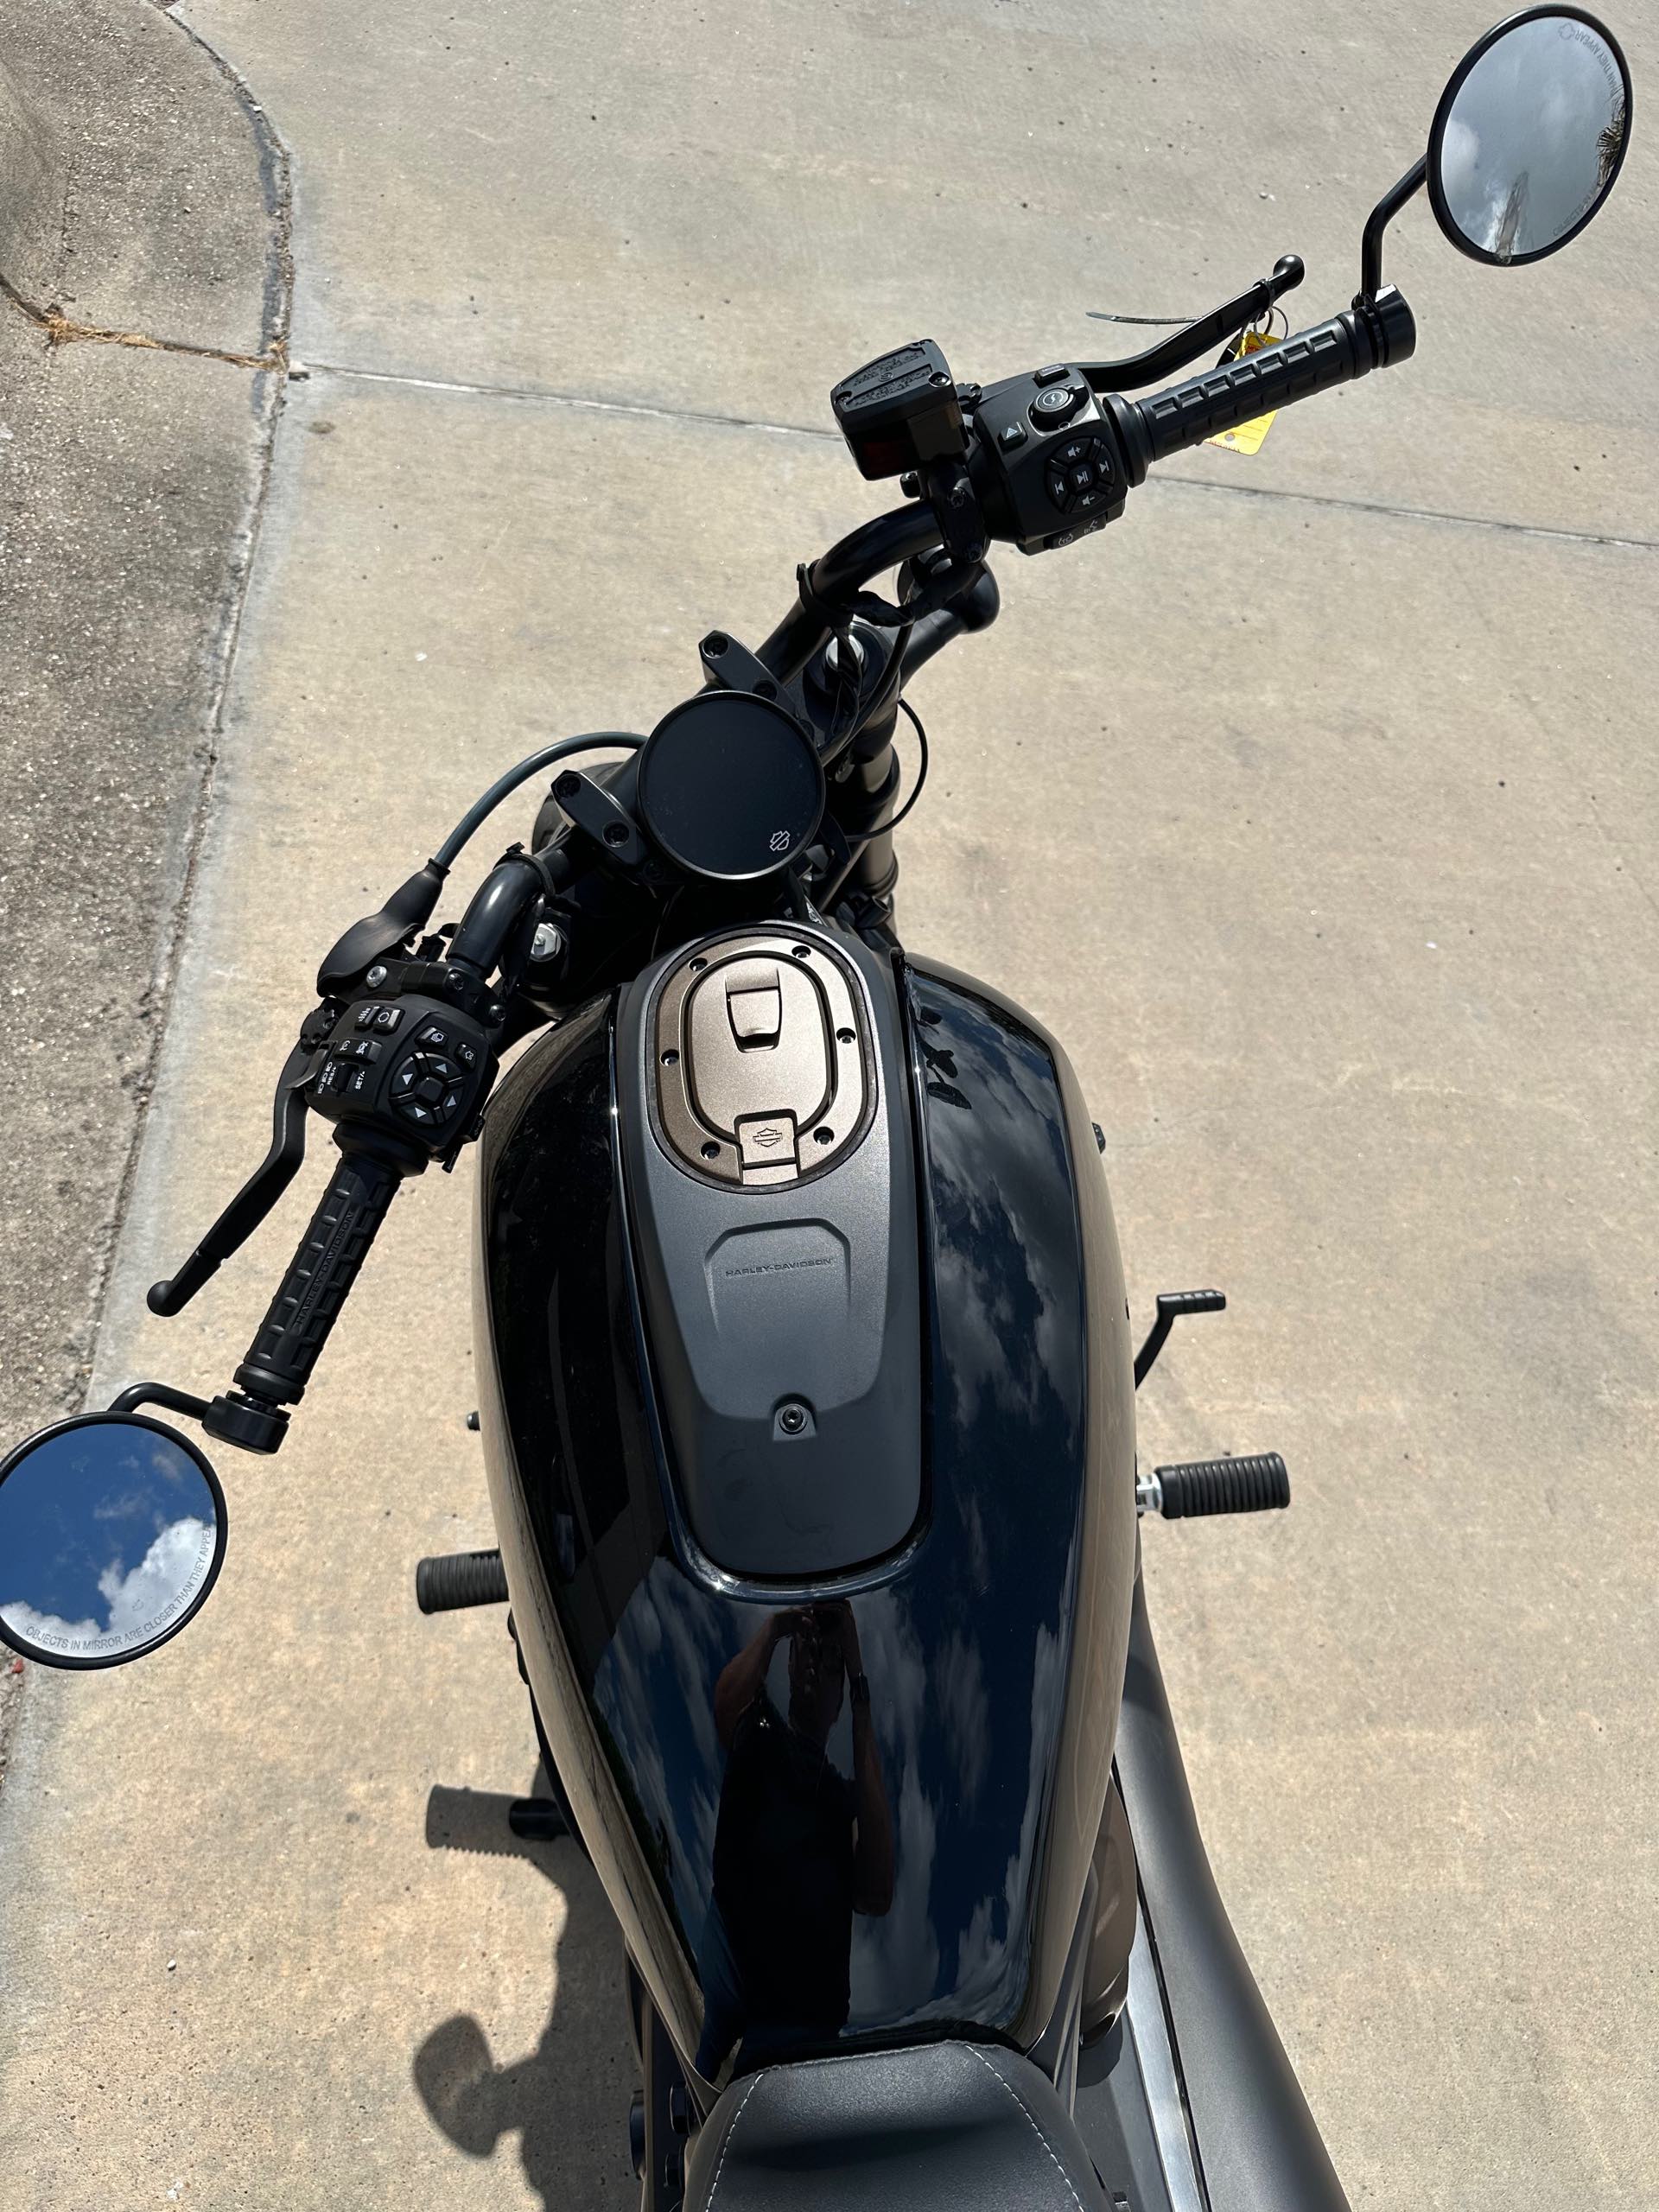 2022 Harley-Davidson Sportster S at Corpus Christi Harley-Davidson